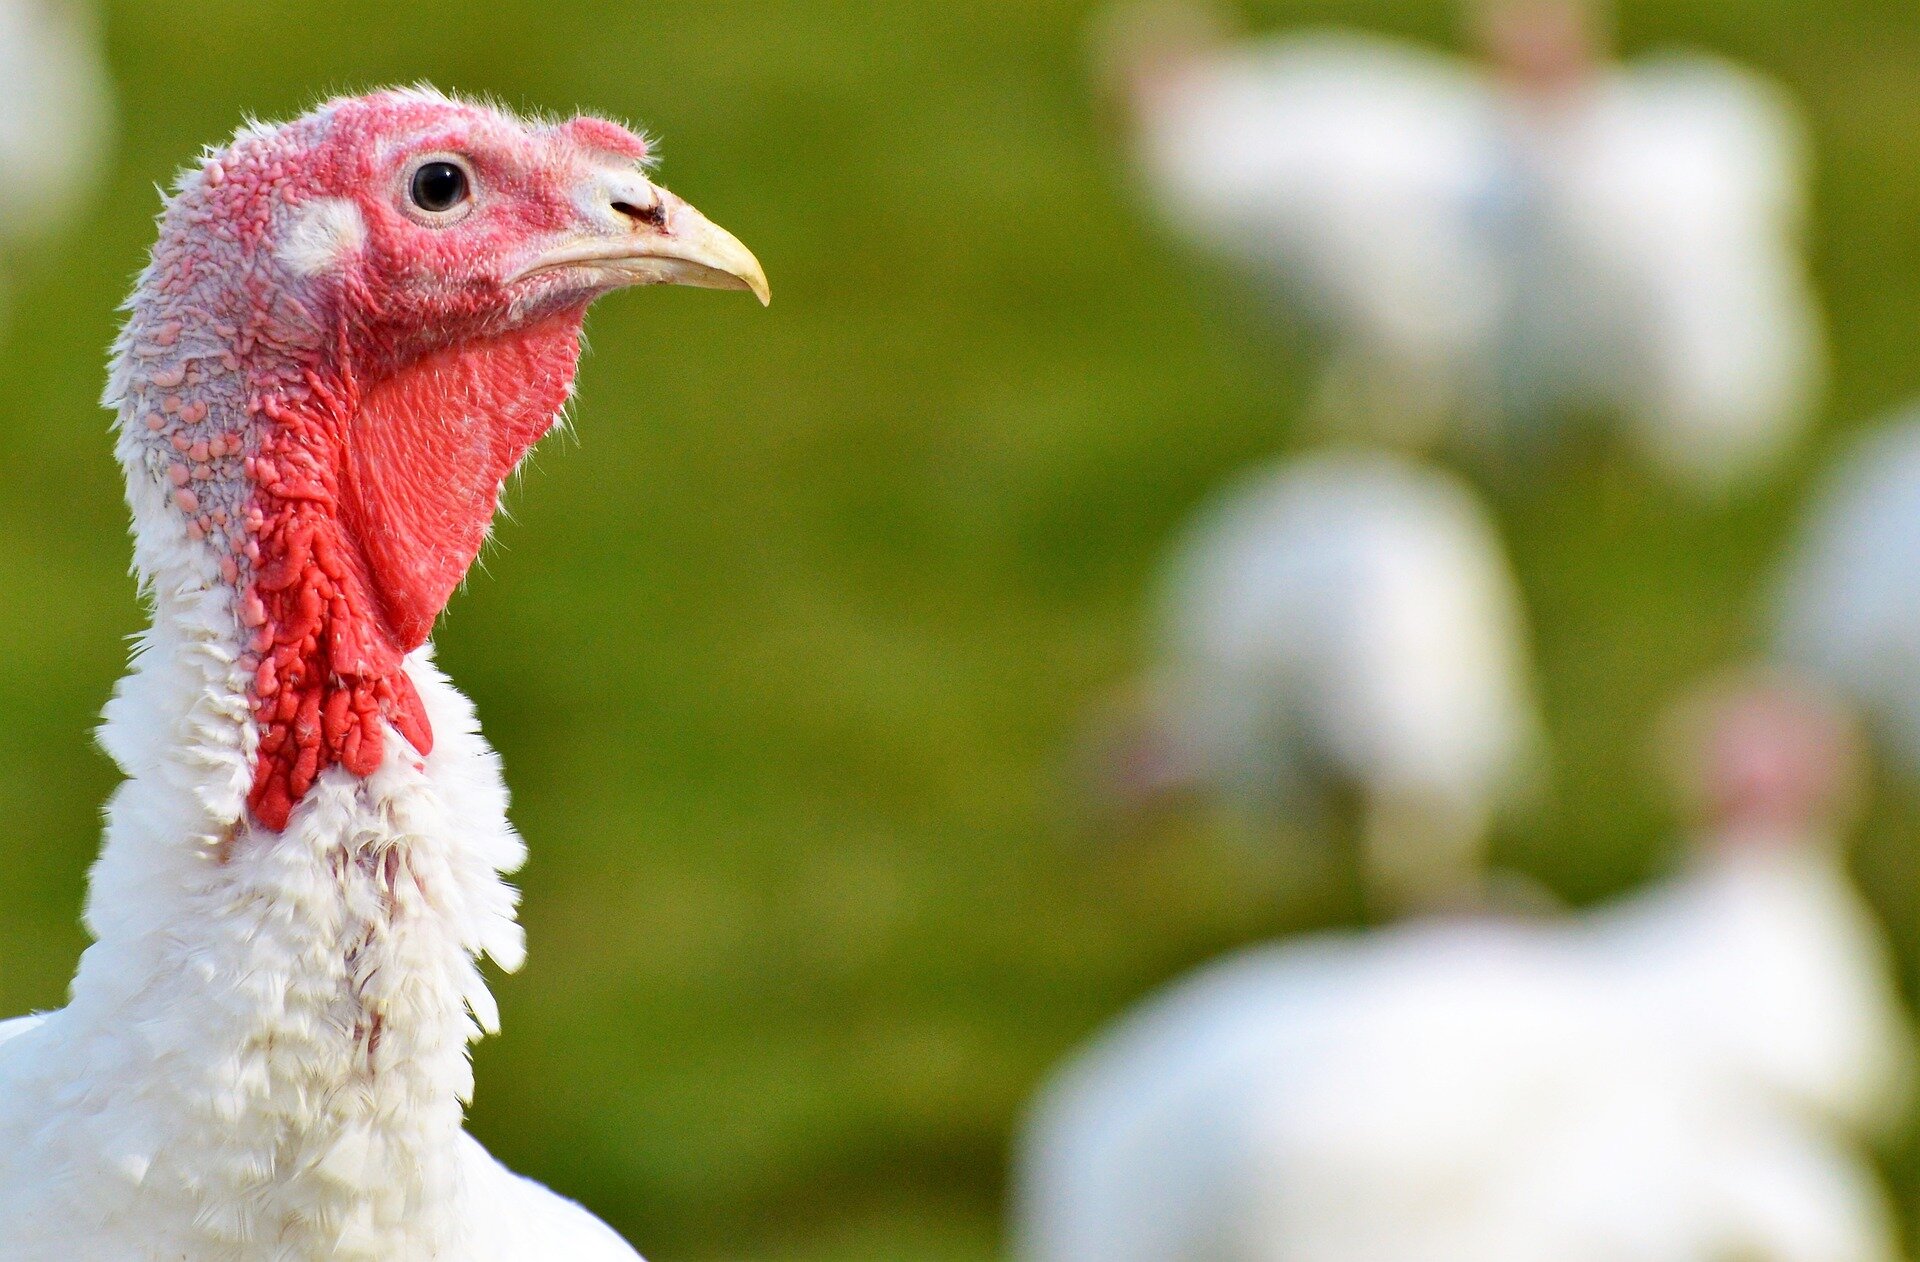 #Iowa egg, turkey farms to lose 5 million birds to bird flu